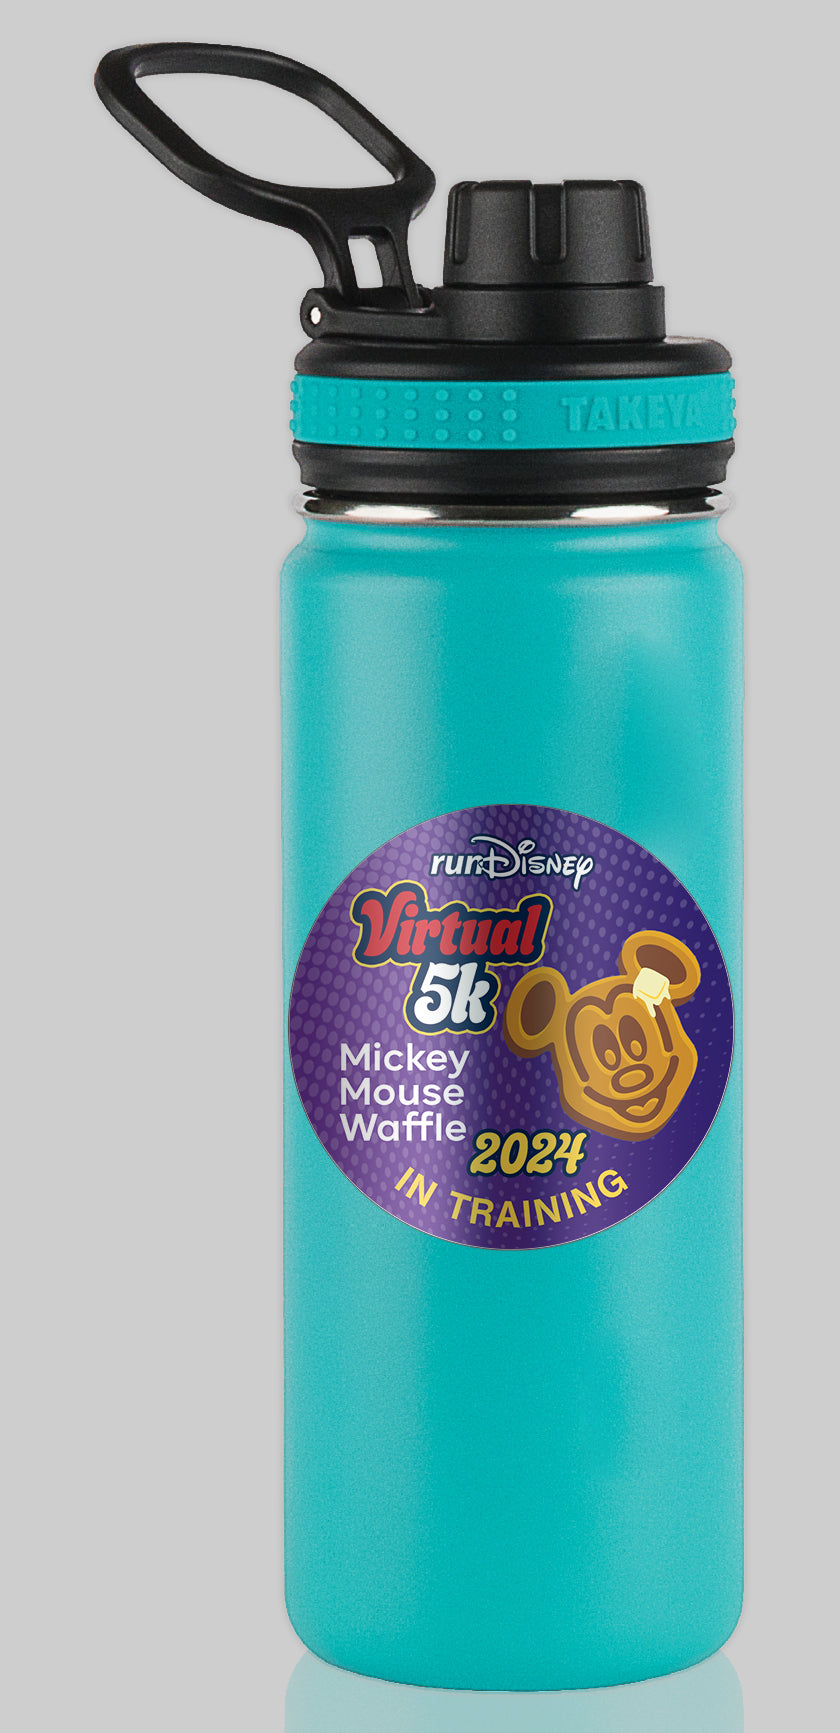 RunDisney Summer Virtual Series 2024 Mickey Mouse Waffle 5K 3.1 Miles IN TRAINING Water Bottle Mug Sticker